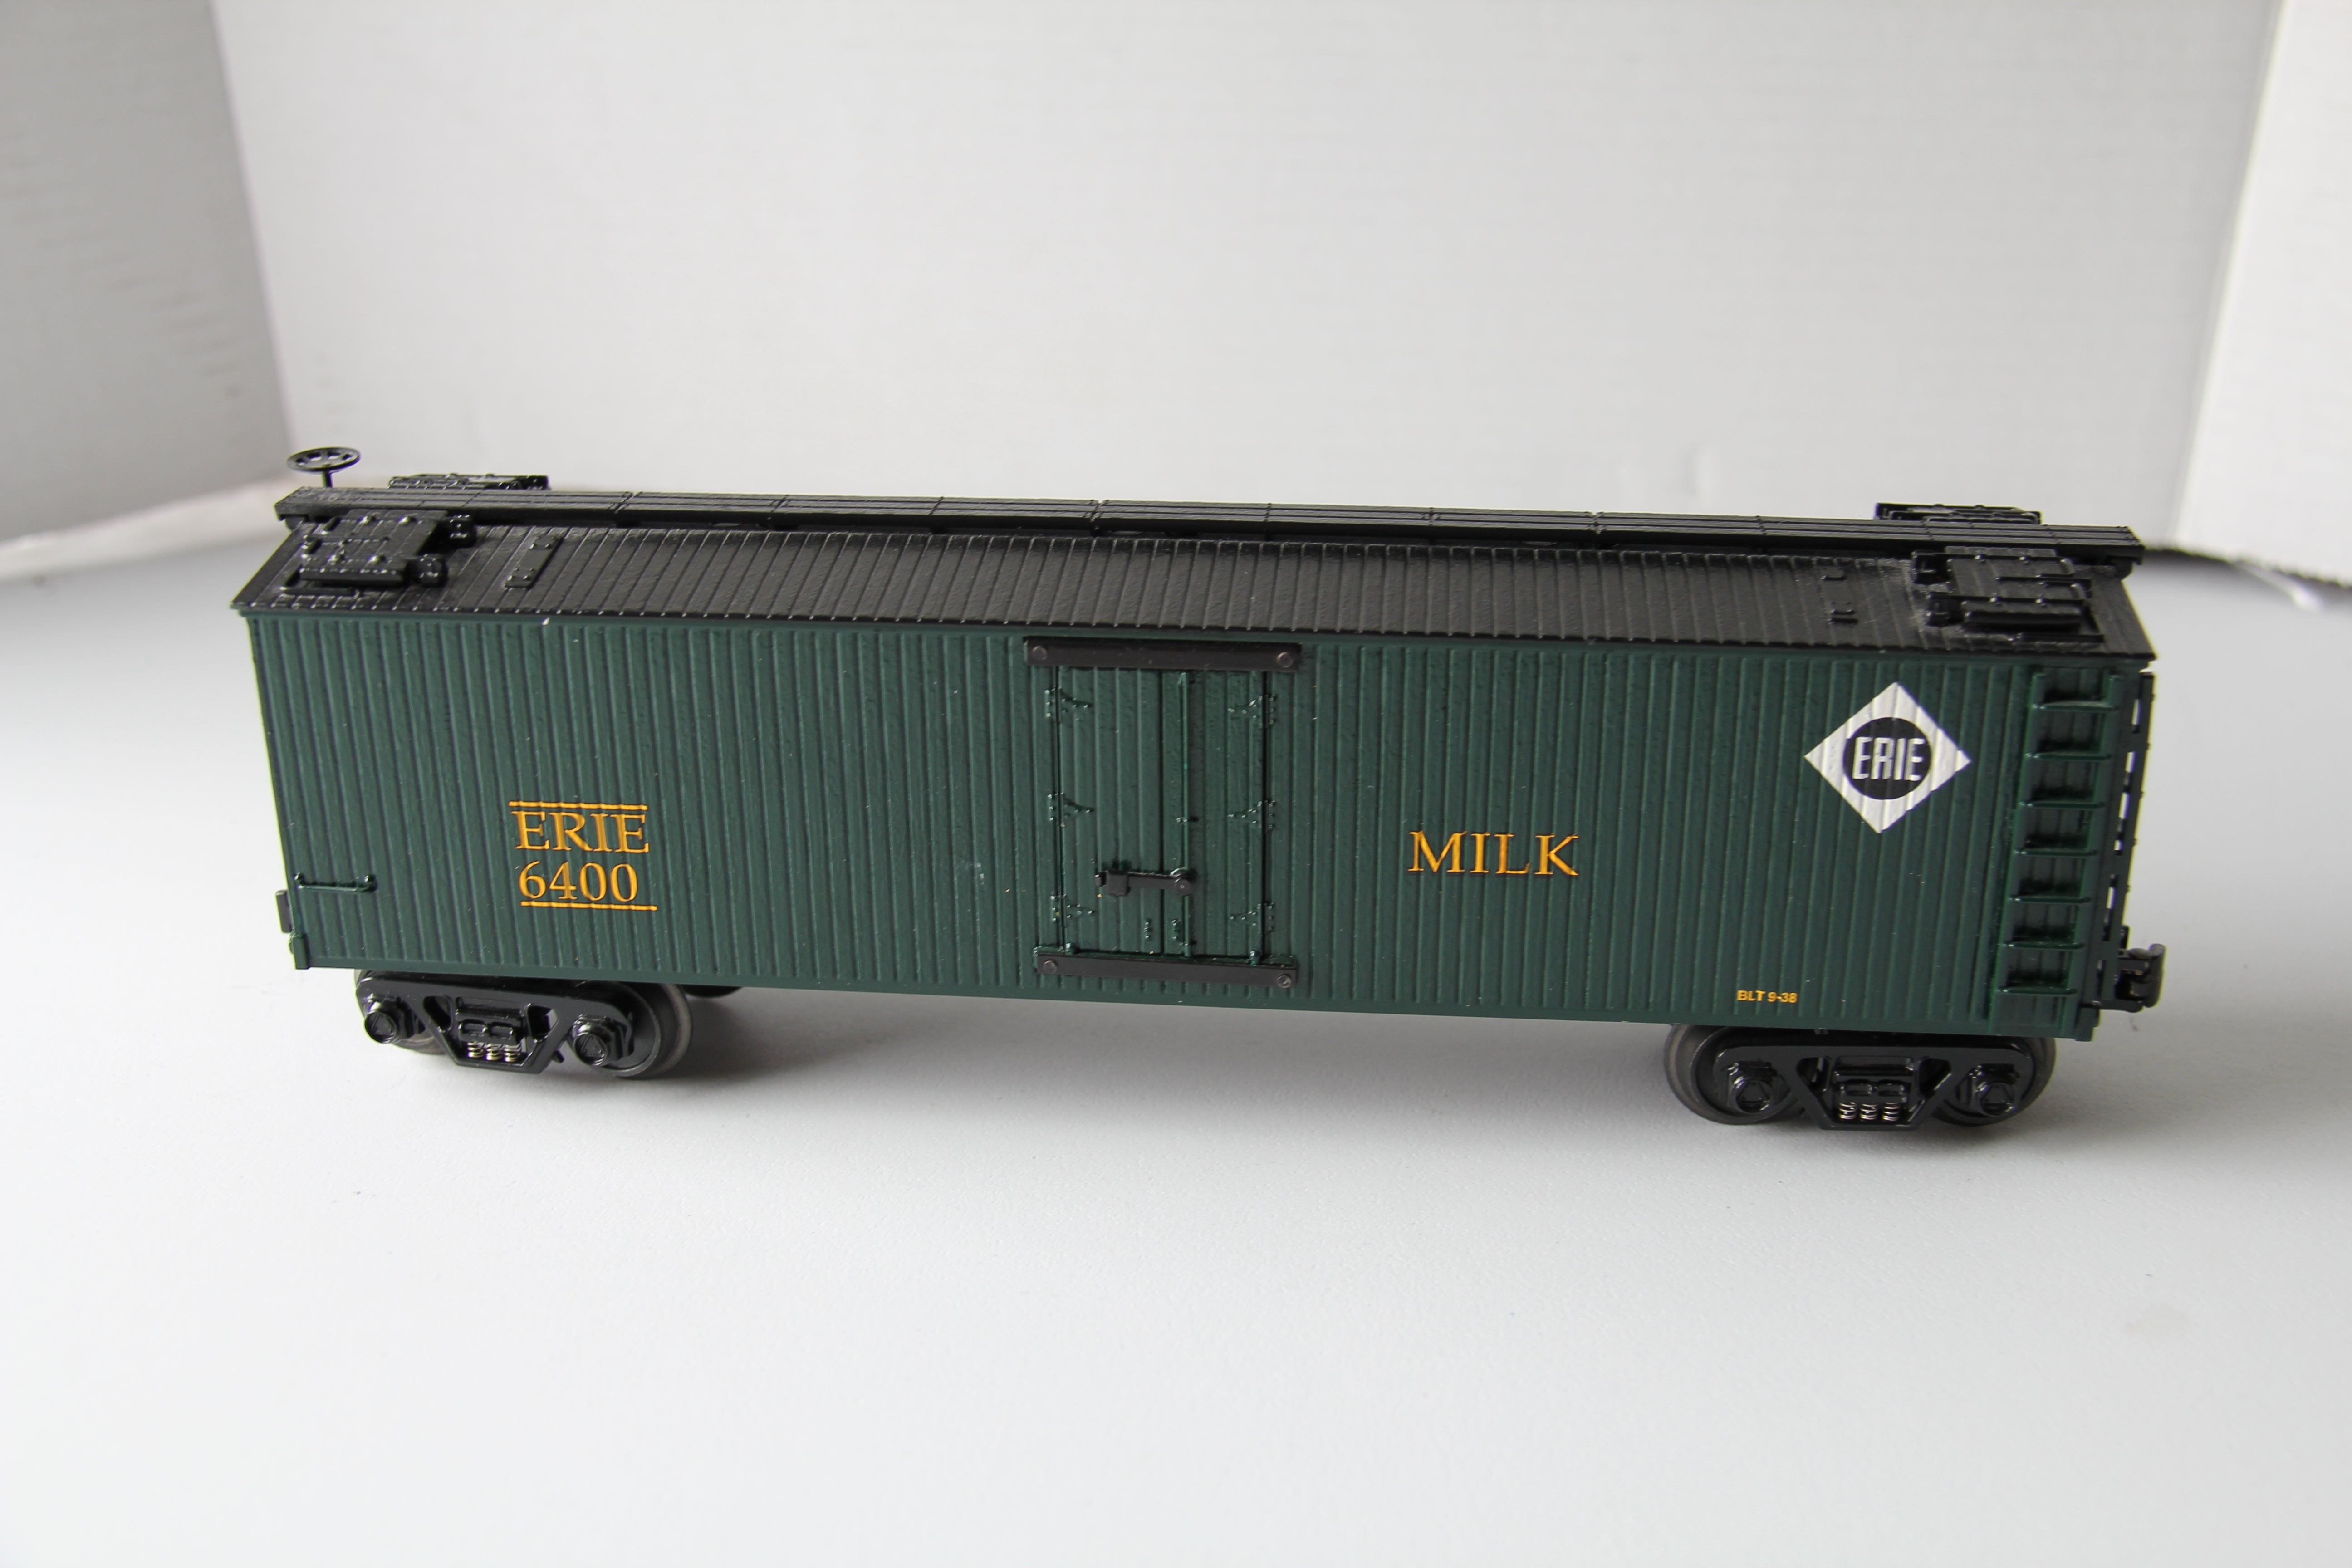 Rail King 30-8622 Erie Die-Cast Reefer/Milk Car-Second hand-M2510